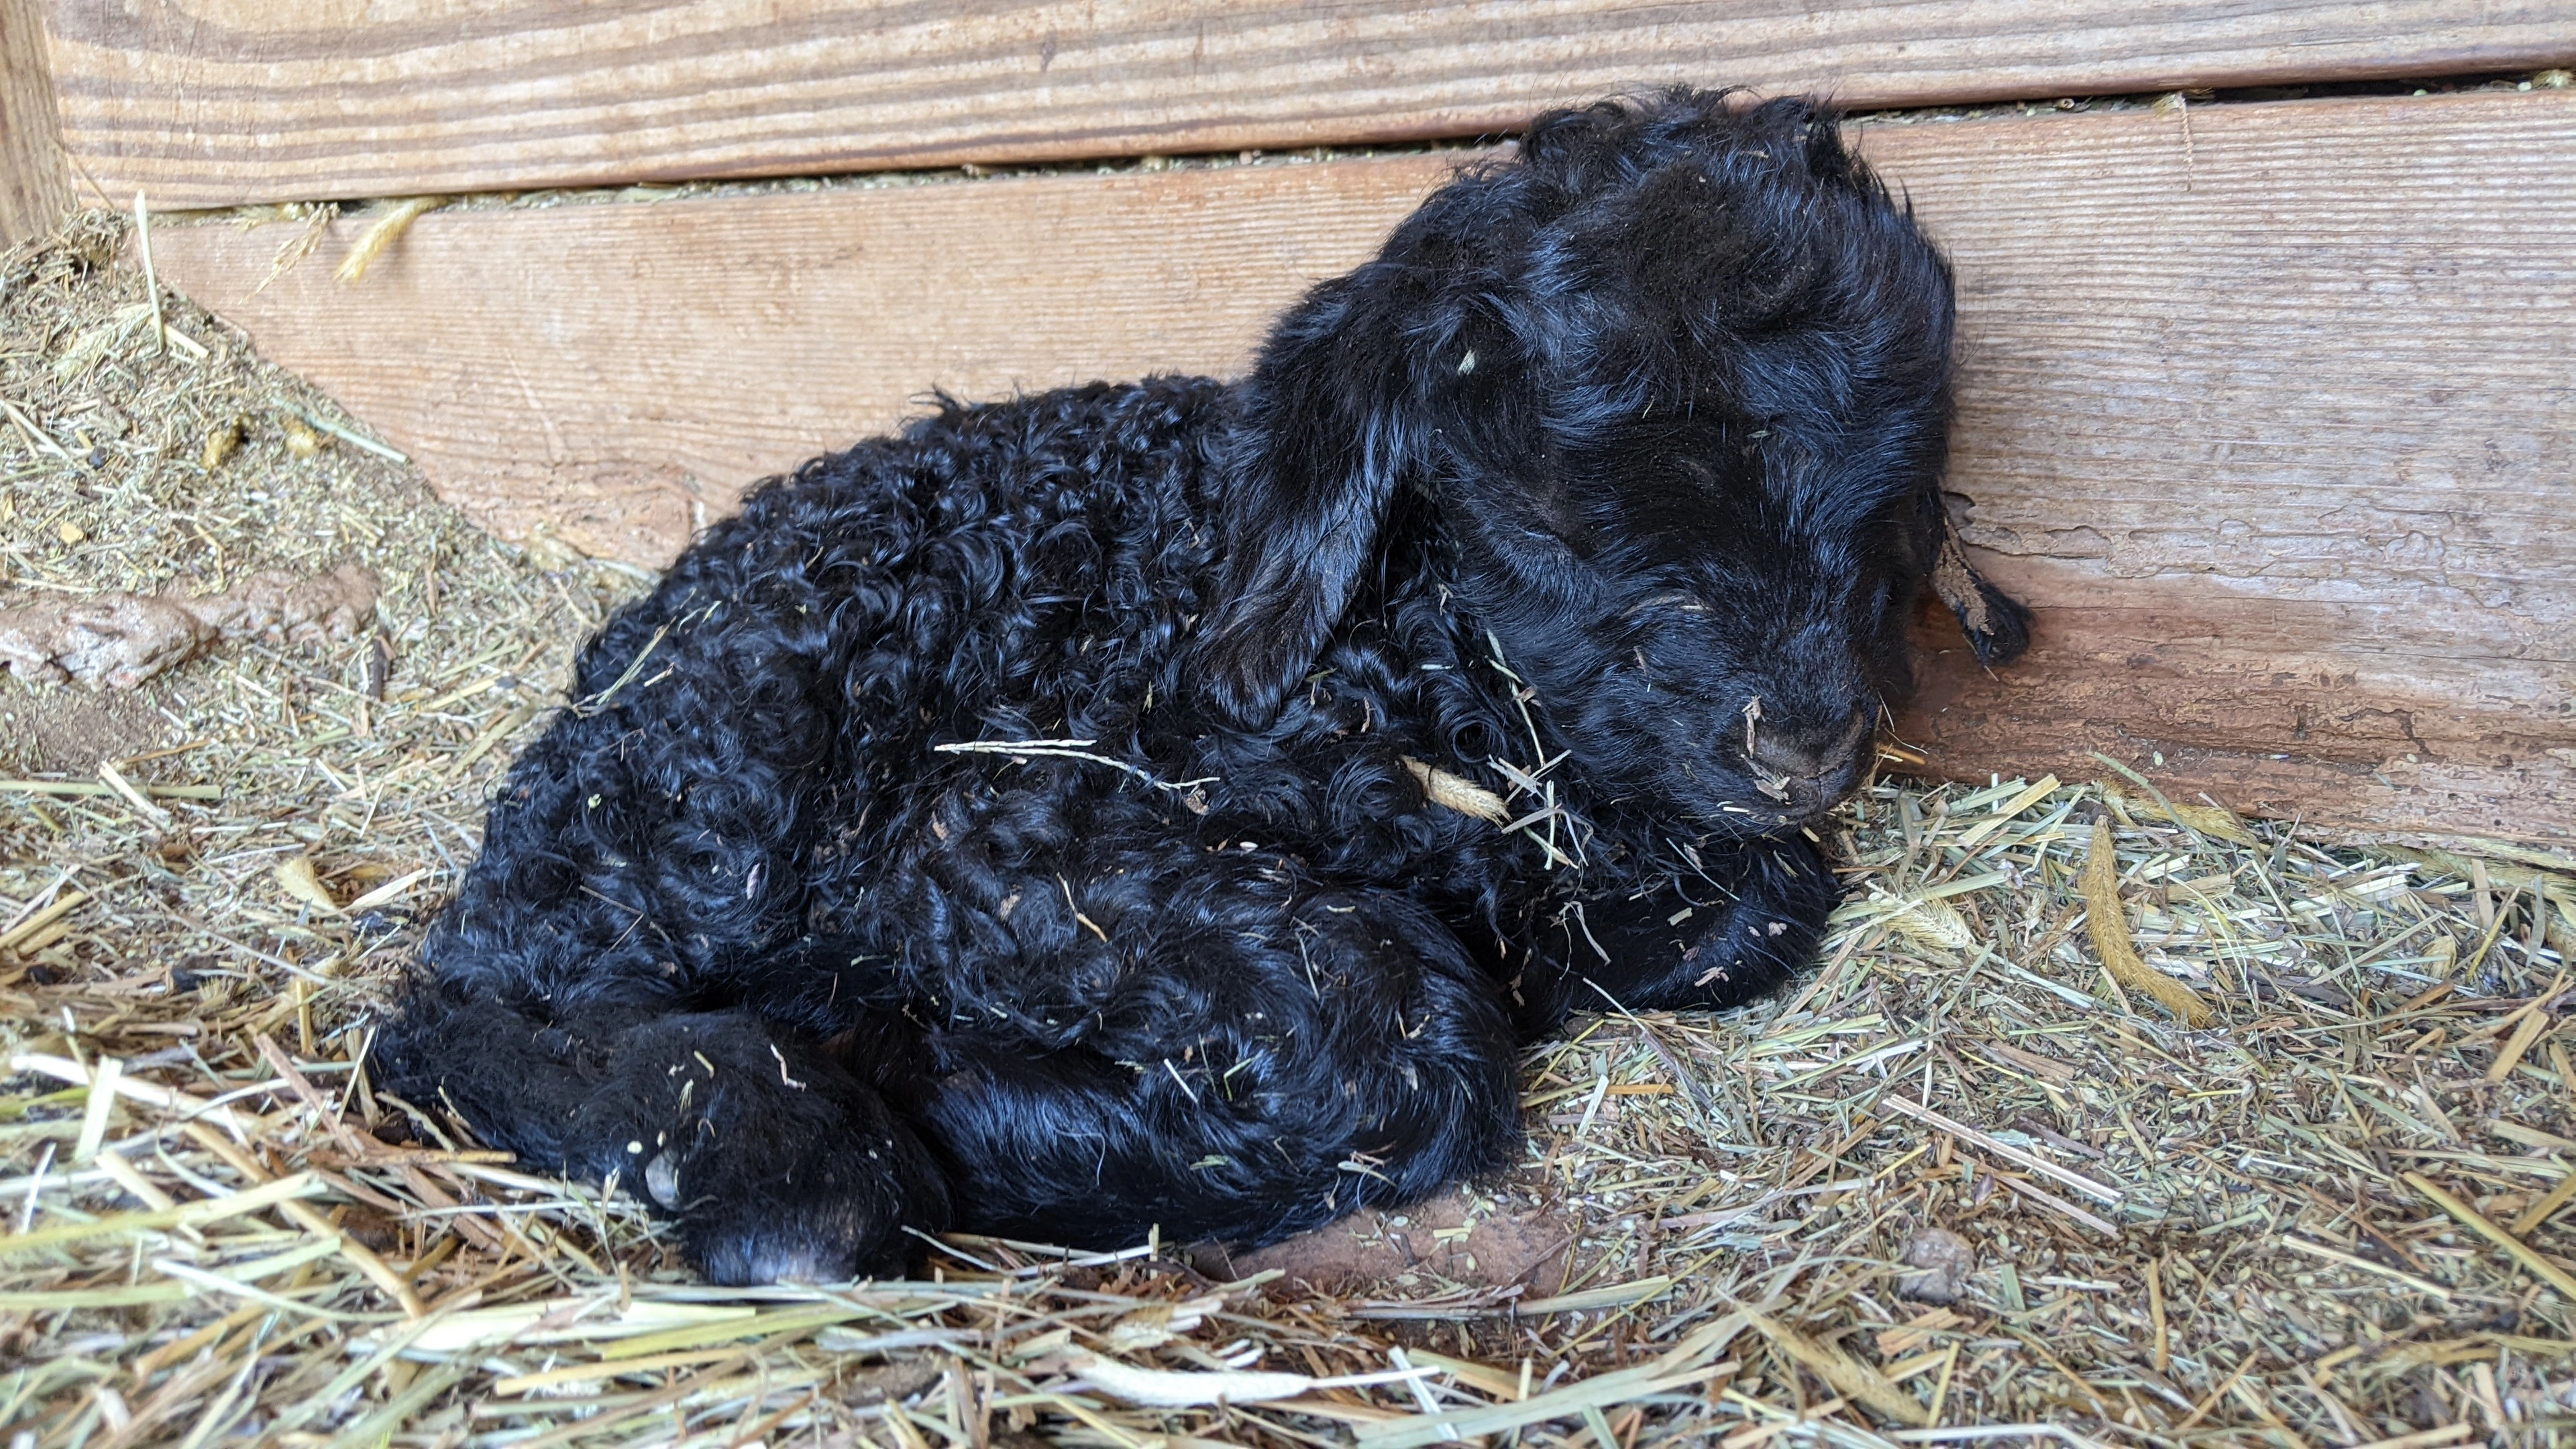 An image of a newborn goat named Teff